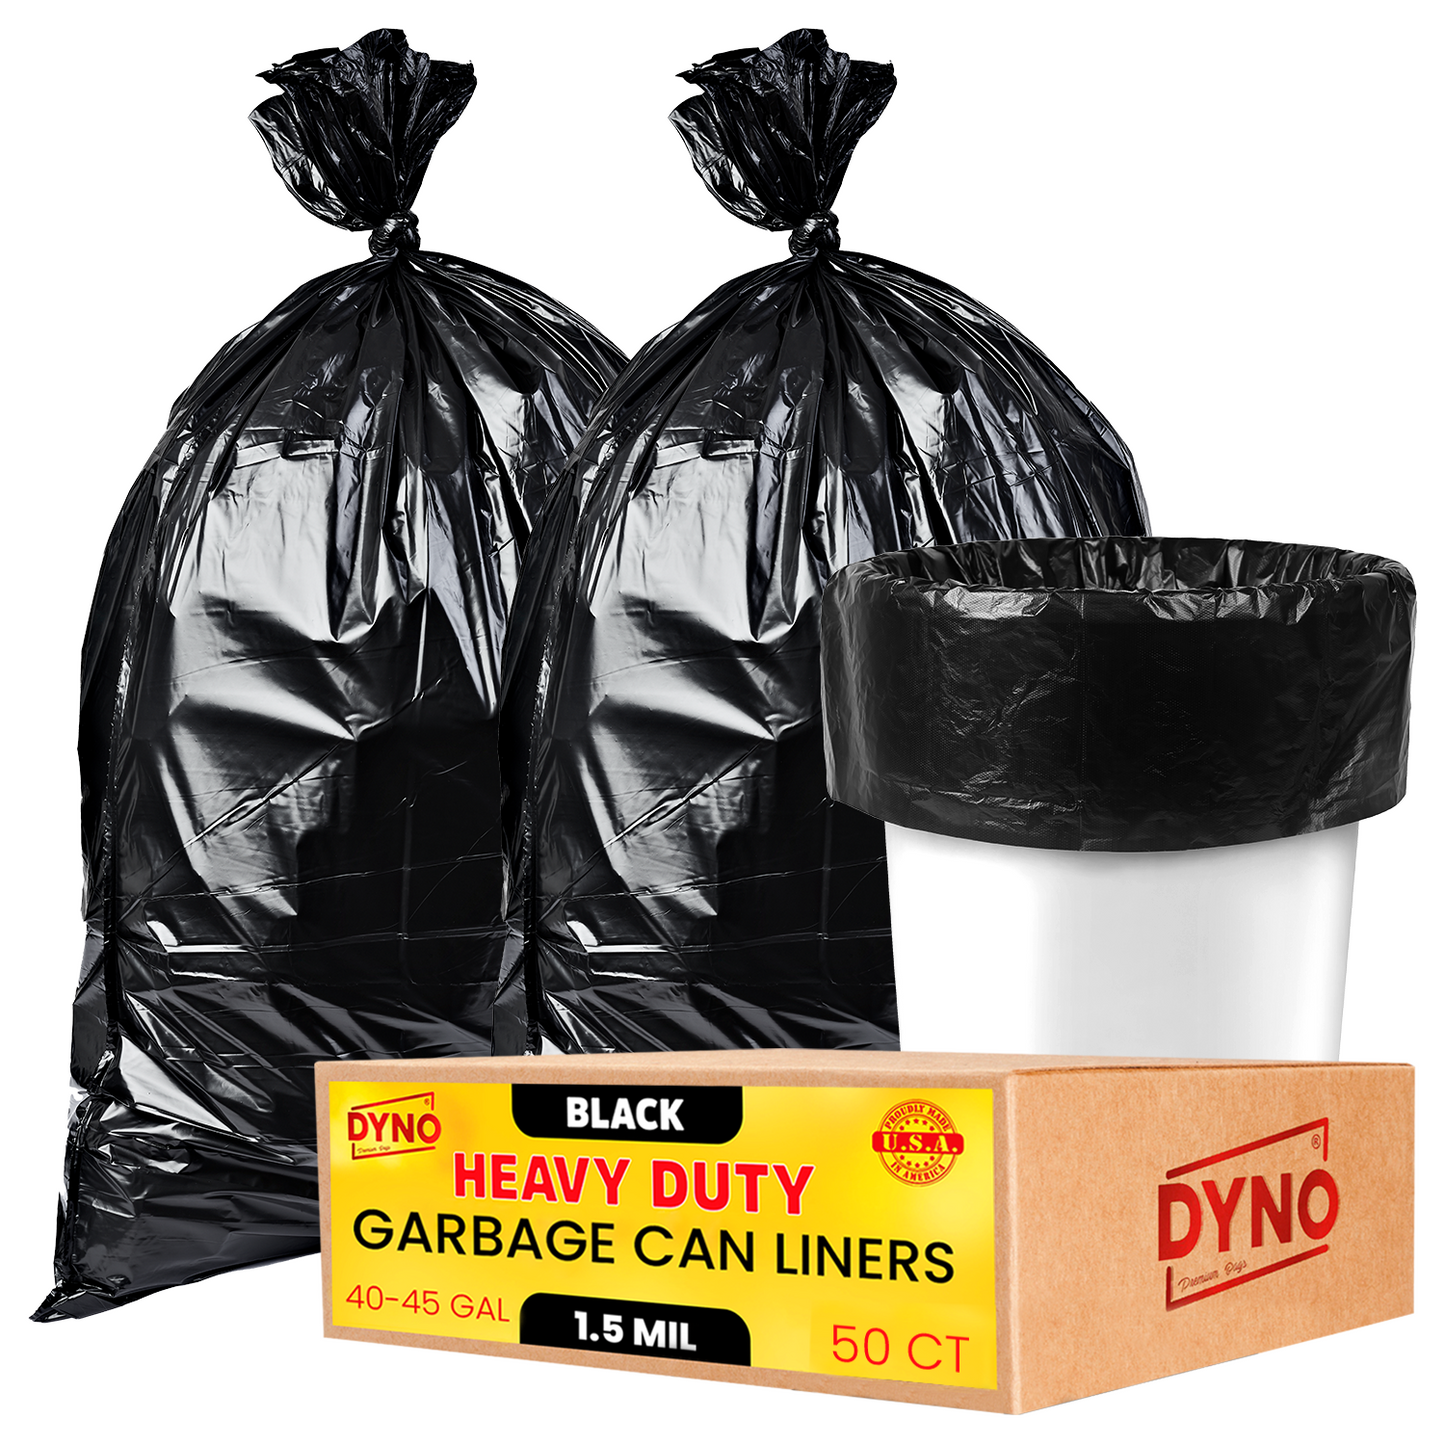 Reli. SuperValue 40-45 Gallon Trash Bags, 50 Count, Made in USA, Black  Large Garbage Bags, 40 Gallon - 42 Gallon - 44 Gallon - 45 Gallon